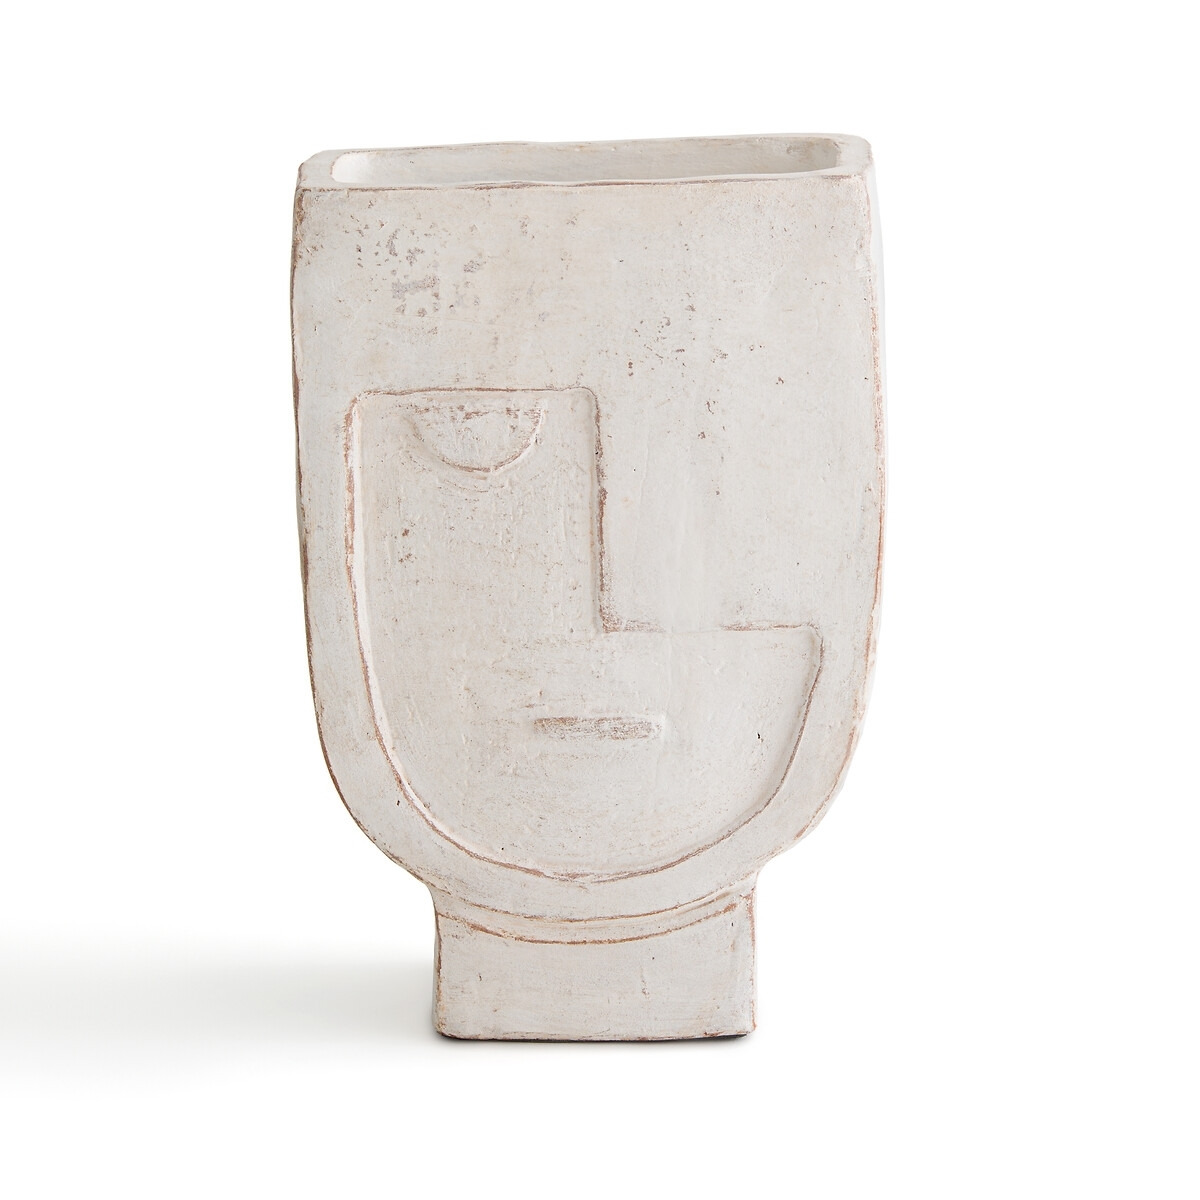 Atali Small Face Terracotta Vase - image 1